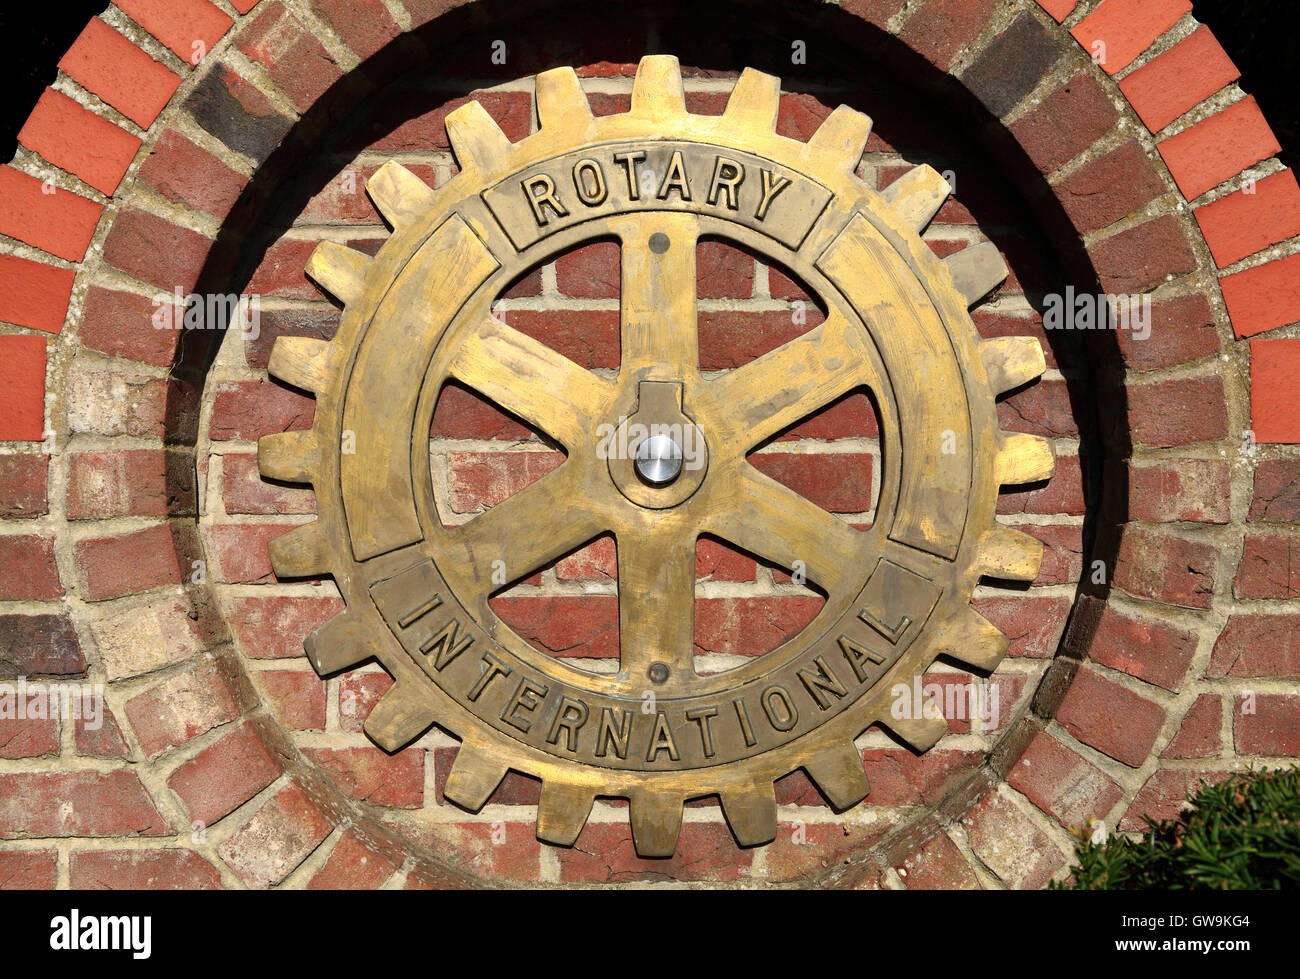 Rotary International, logo, insigne, badge, Hunstanton Norfolk England UK  clubs Photo Stock - Alamy